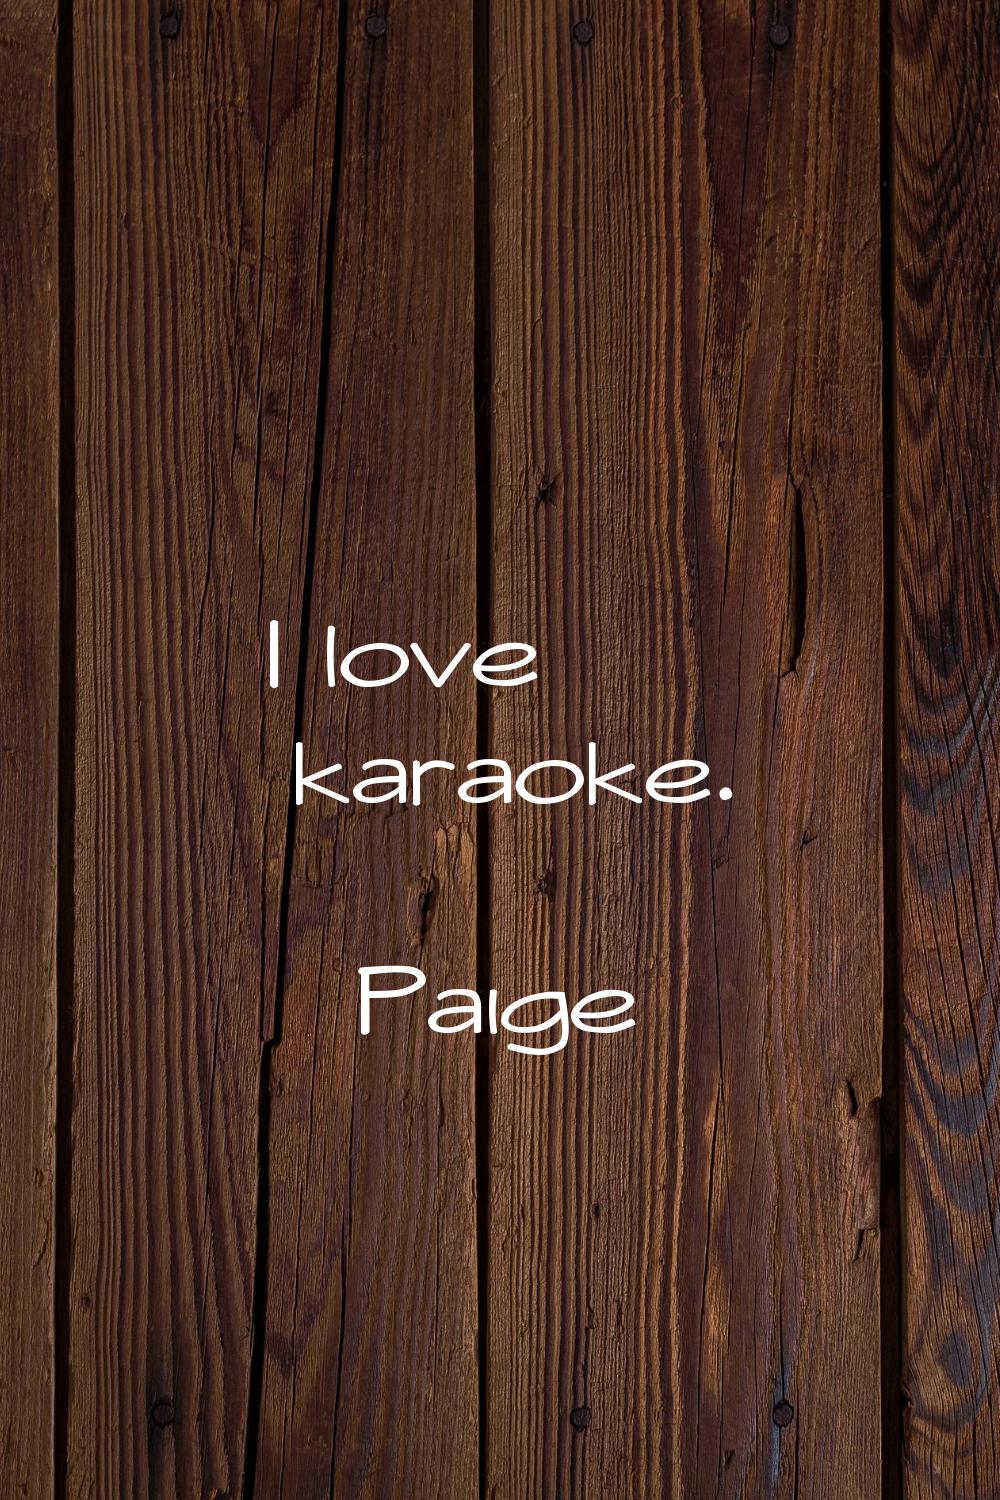 I love karaoke.